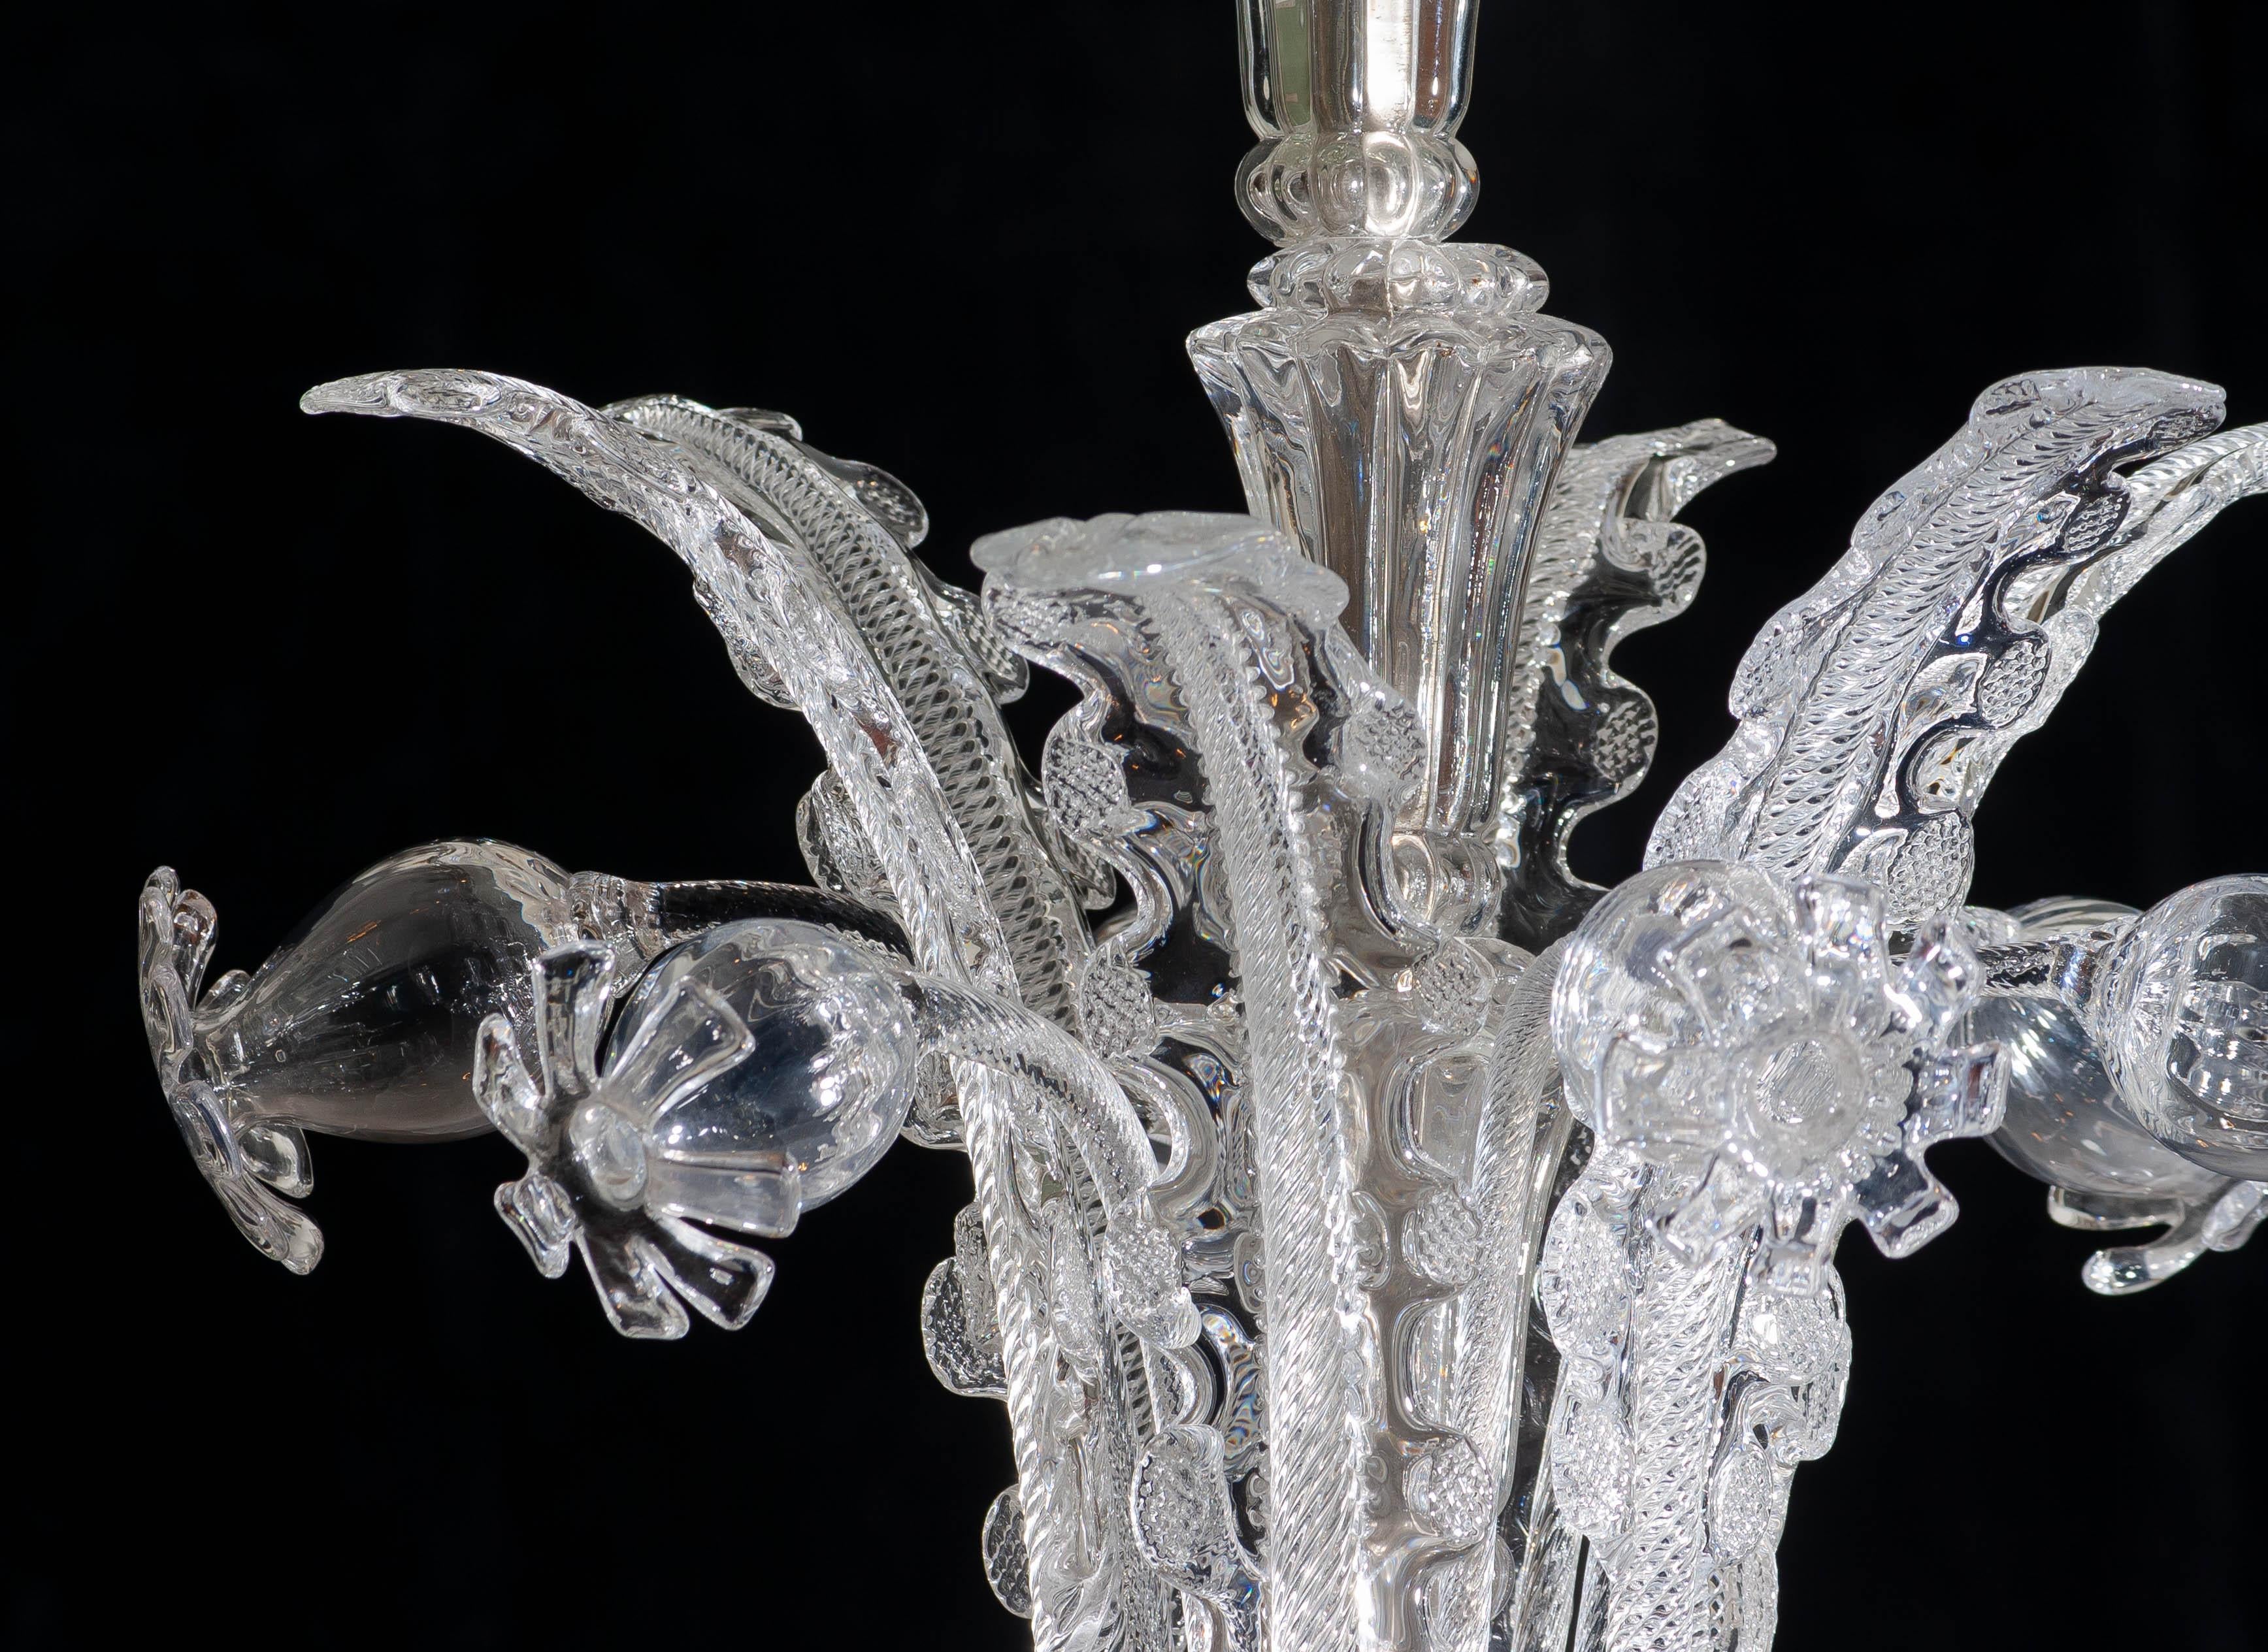 1940 Art Nouveau Crystal Art Glass Chandelier by Fritz Kurz for Orrefors Sweden In Good Condition In Silvolde, Gelderland